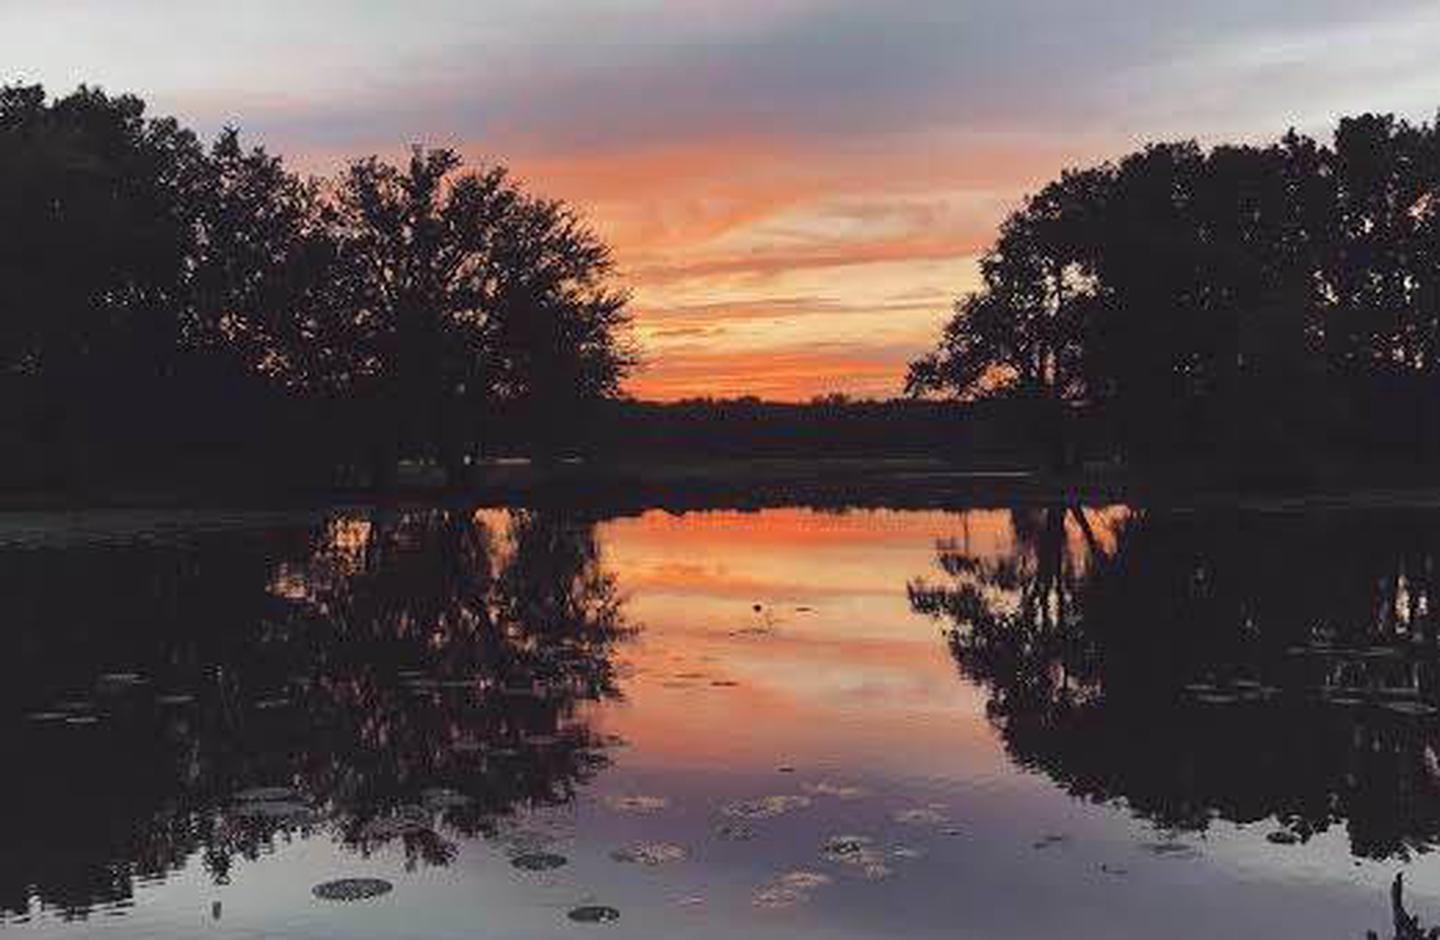 SunsetSunset along the banks of the Mississippi River in Blackhawk Park